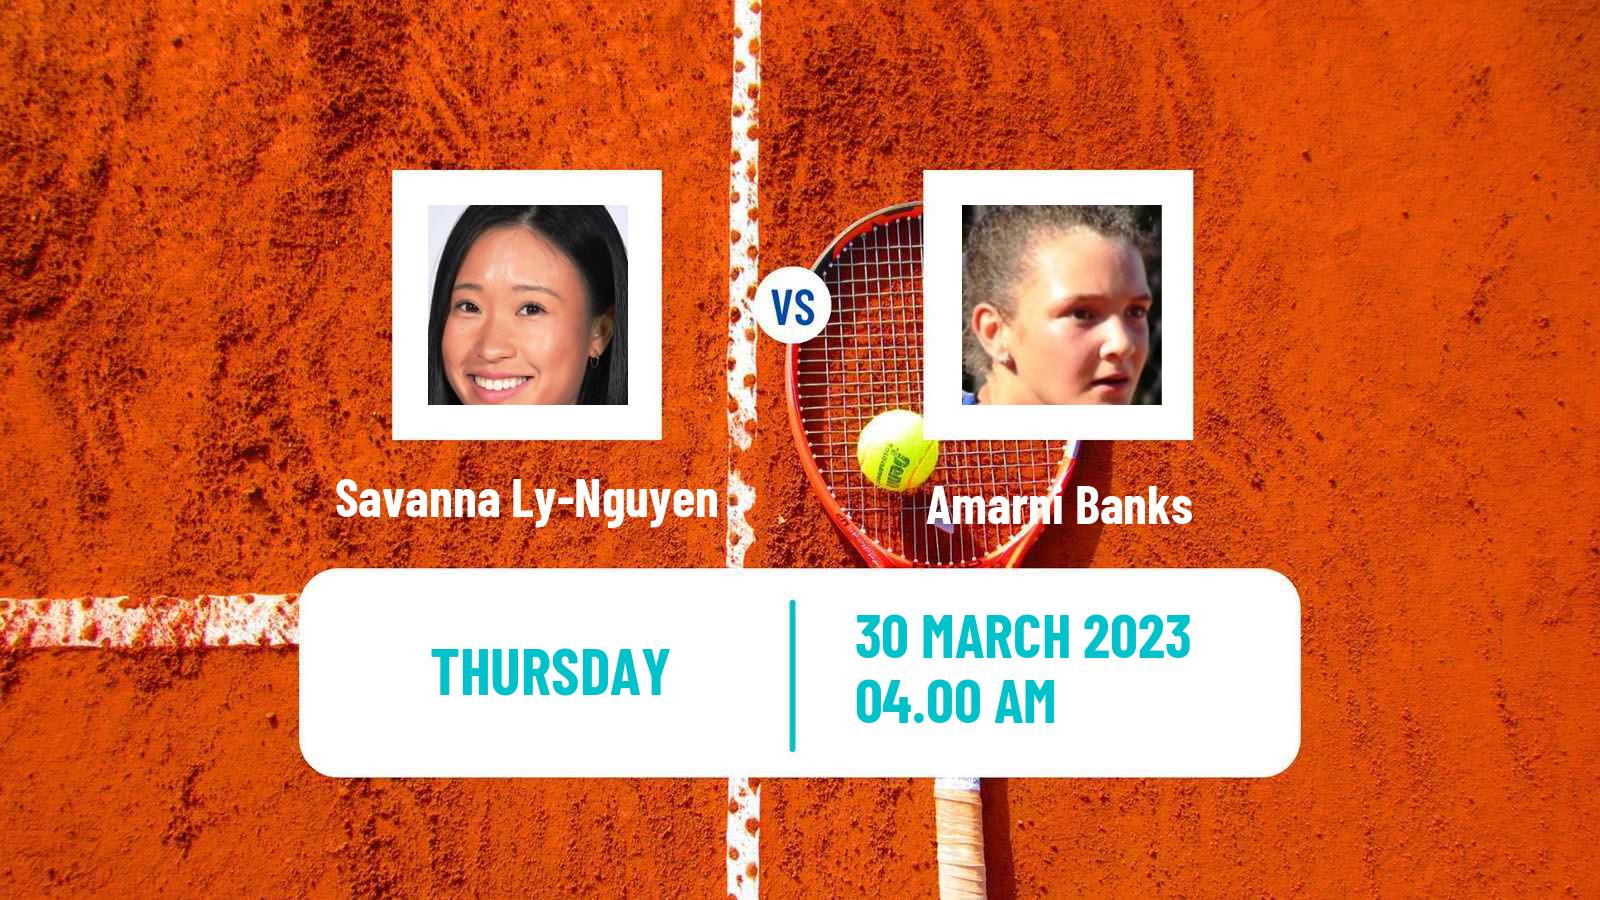 Tennis ITF Tournaments Savanna Ly-Nguyen - Amarni Banks